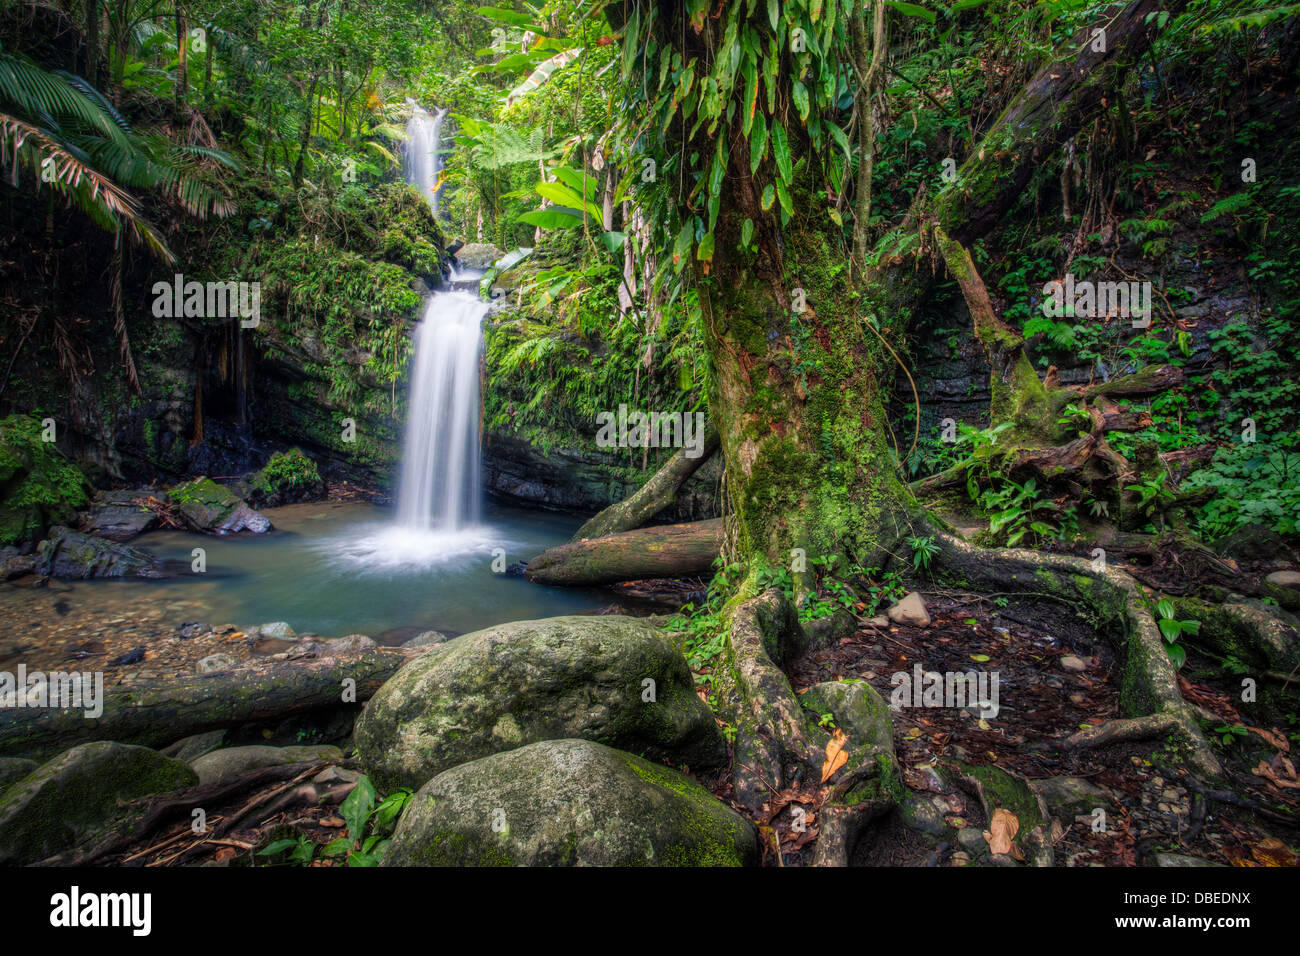 Coperte di muschio albero vicino a Juan Diego cade El Yunque foresta pluviale, Puerto Rico. Foto Stock